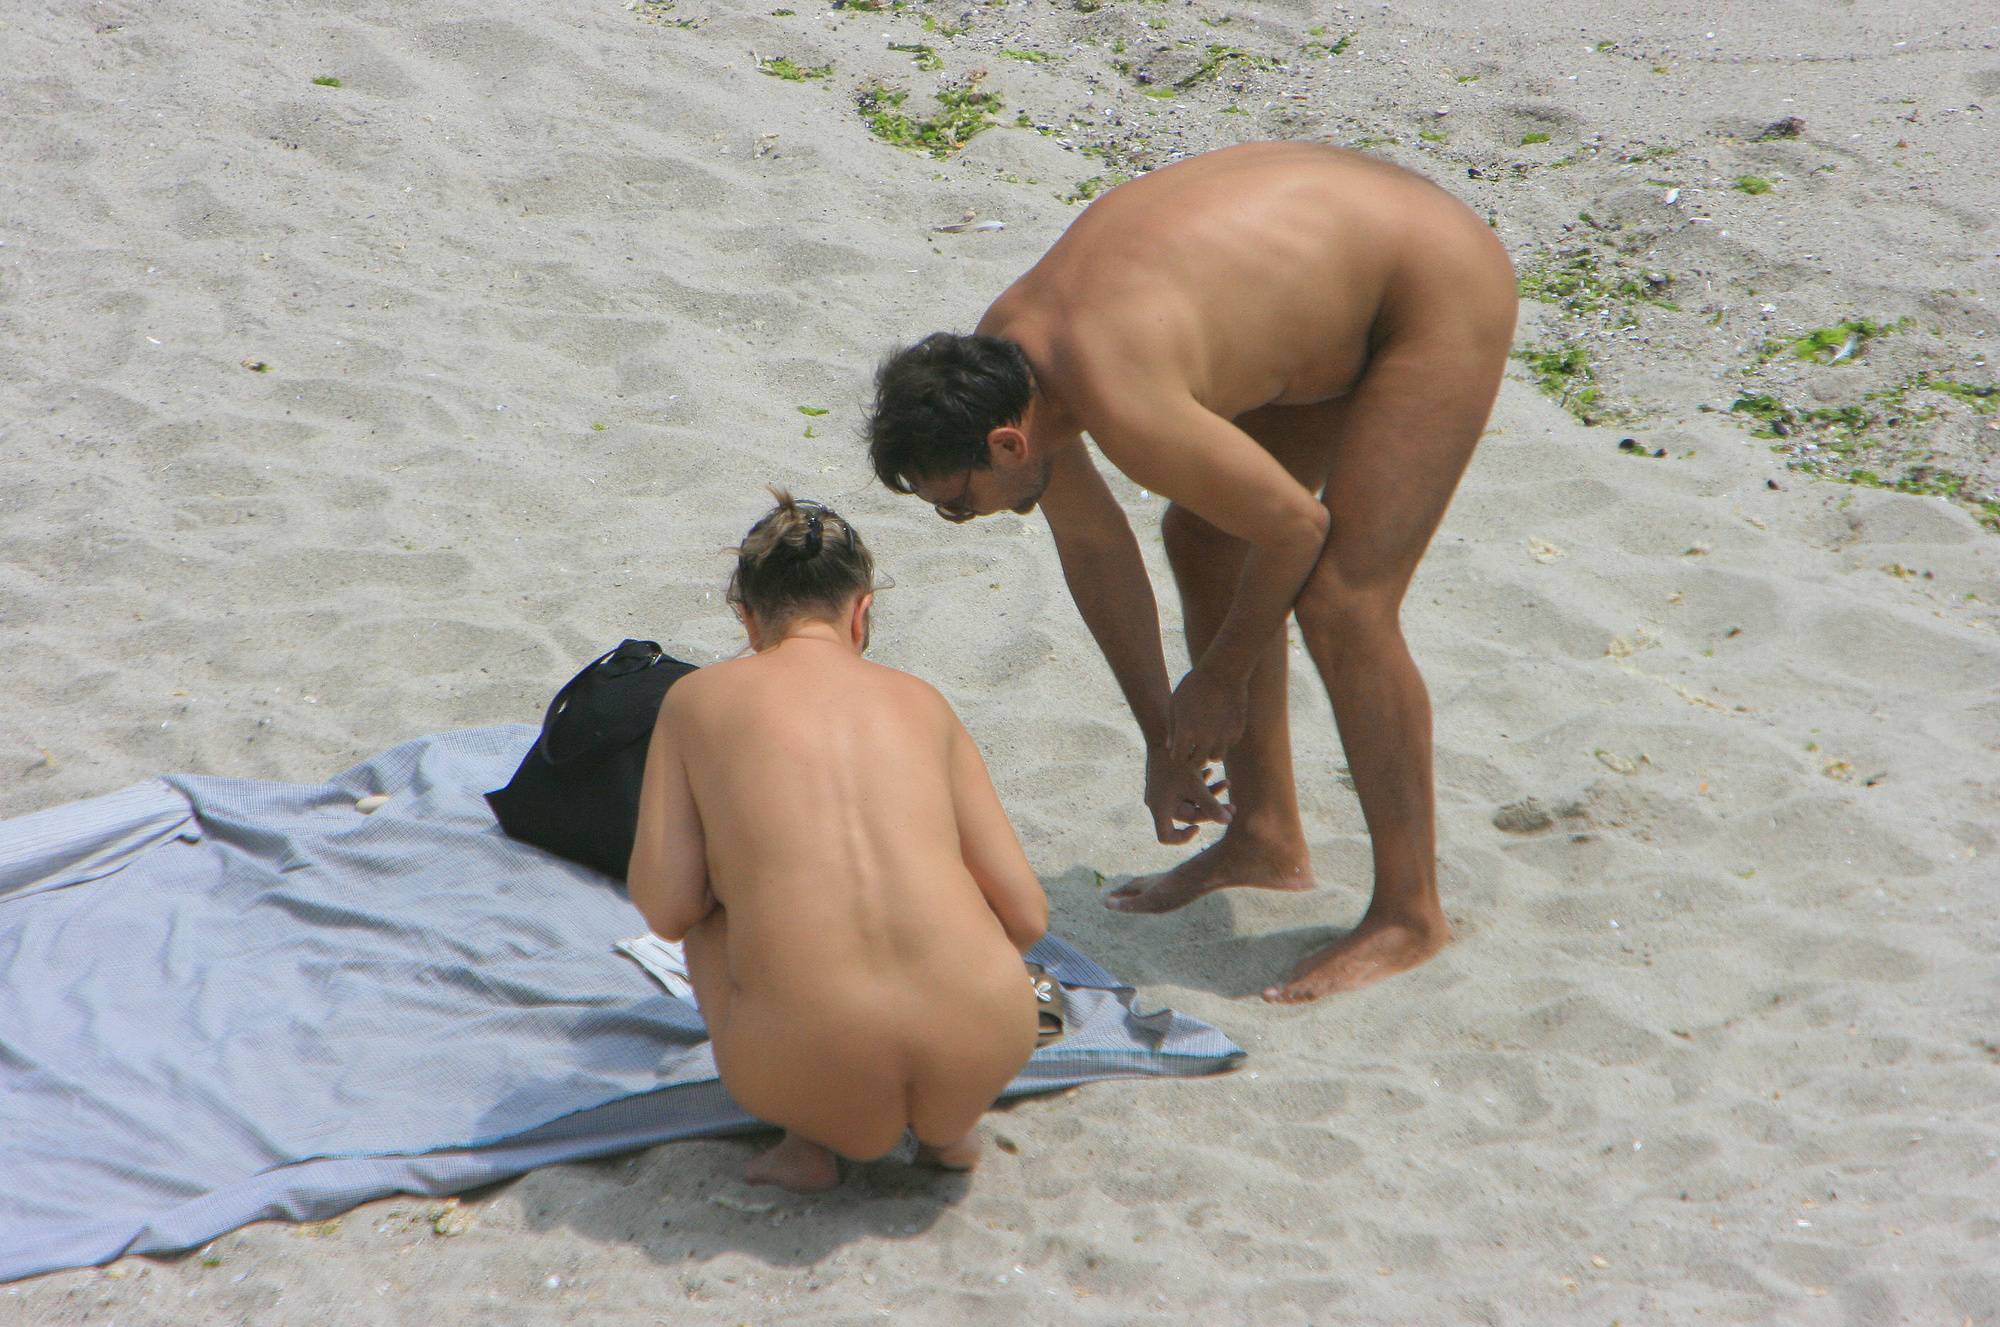 Bulgarian Beach Day Series Nudists Pics - 2